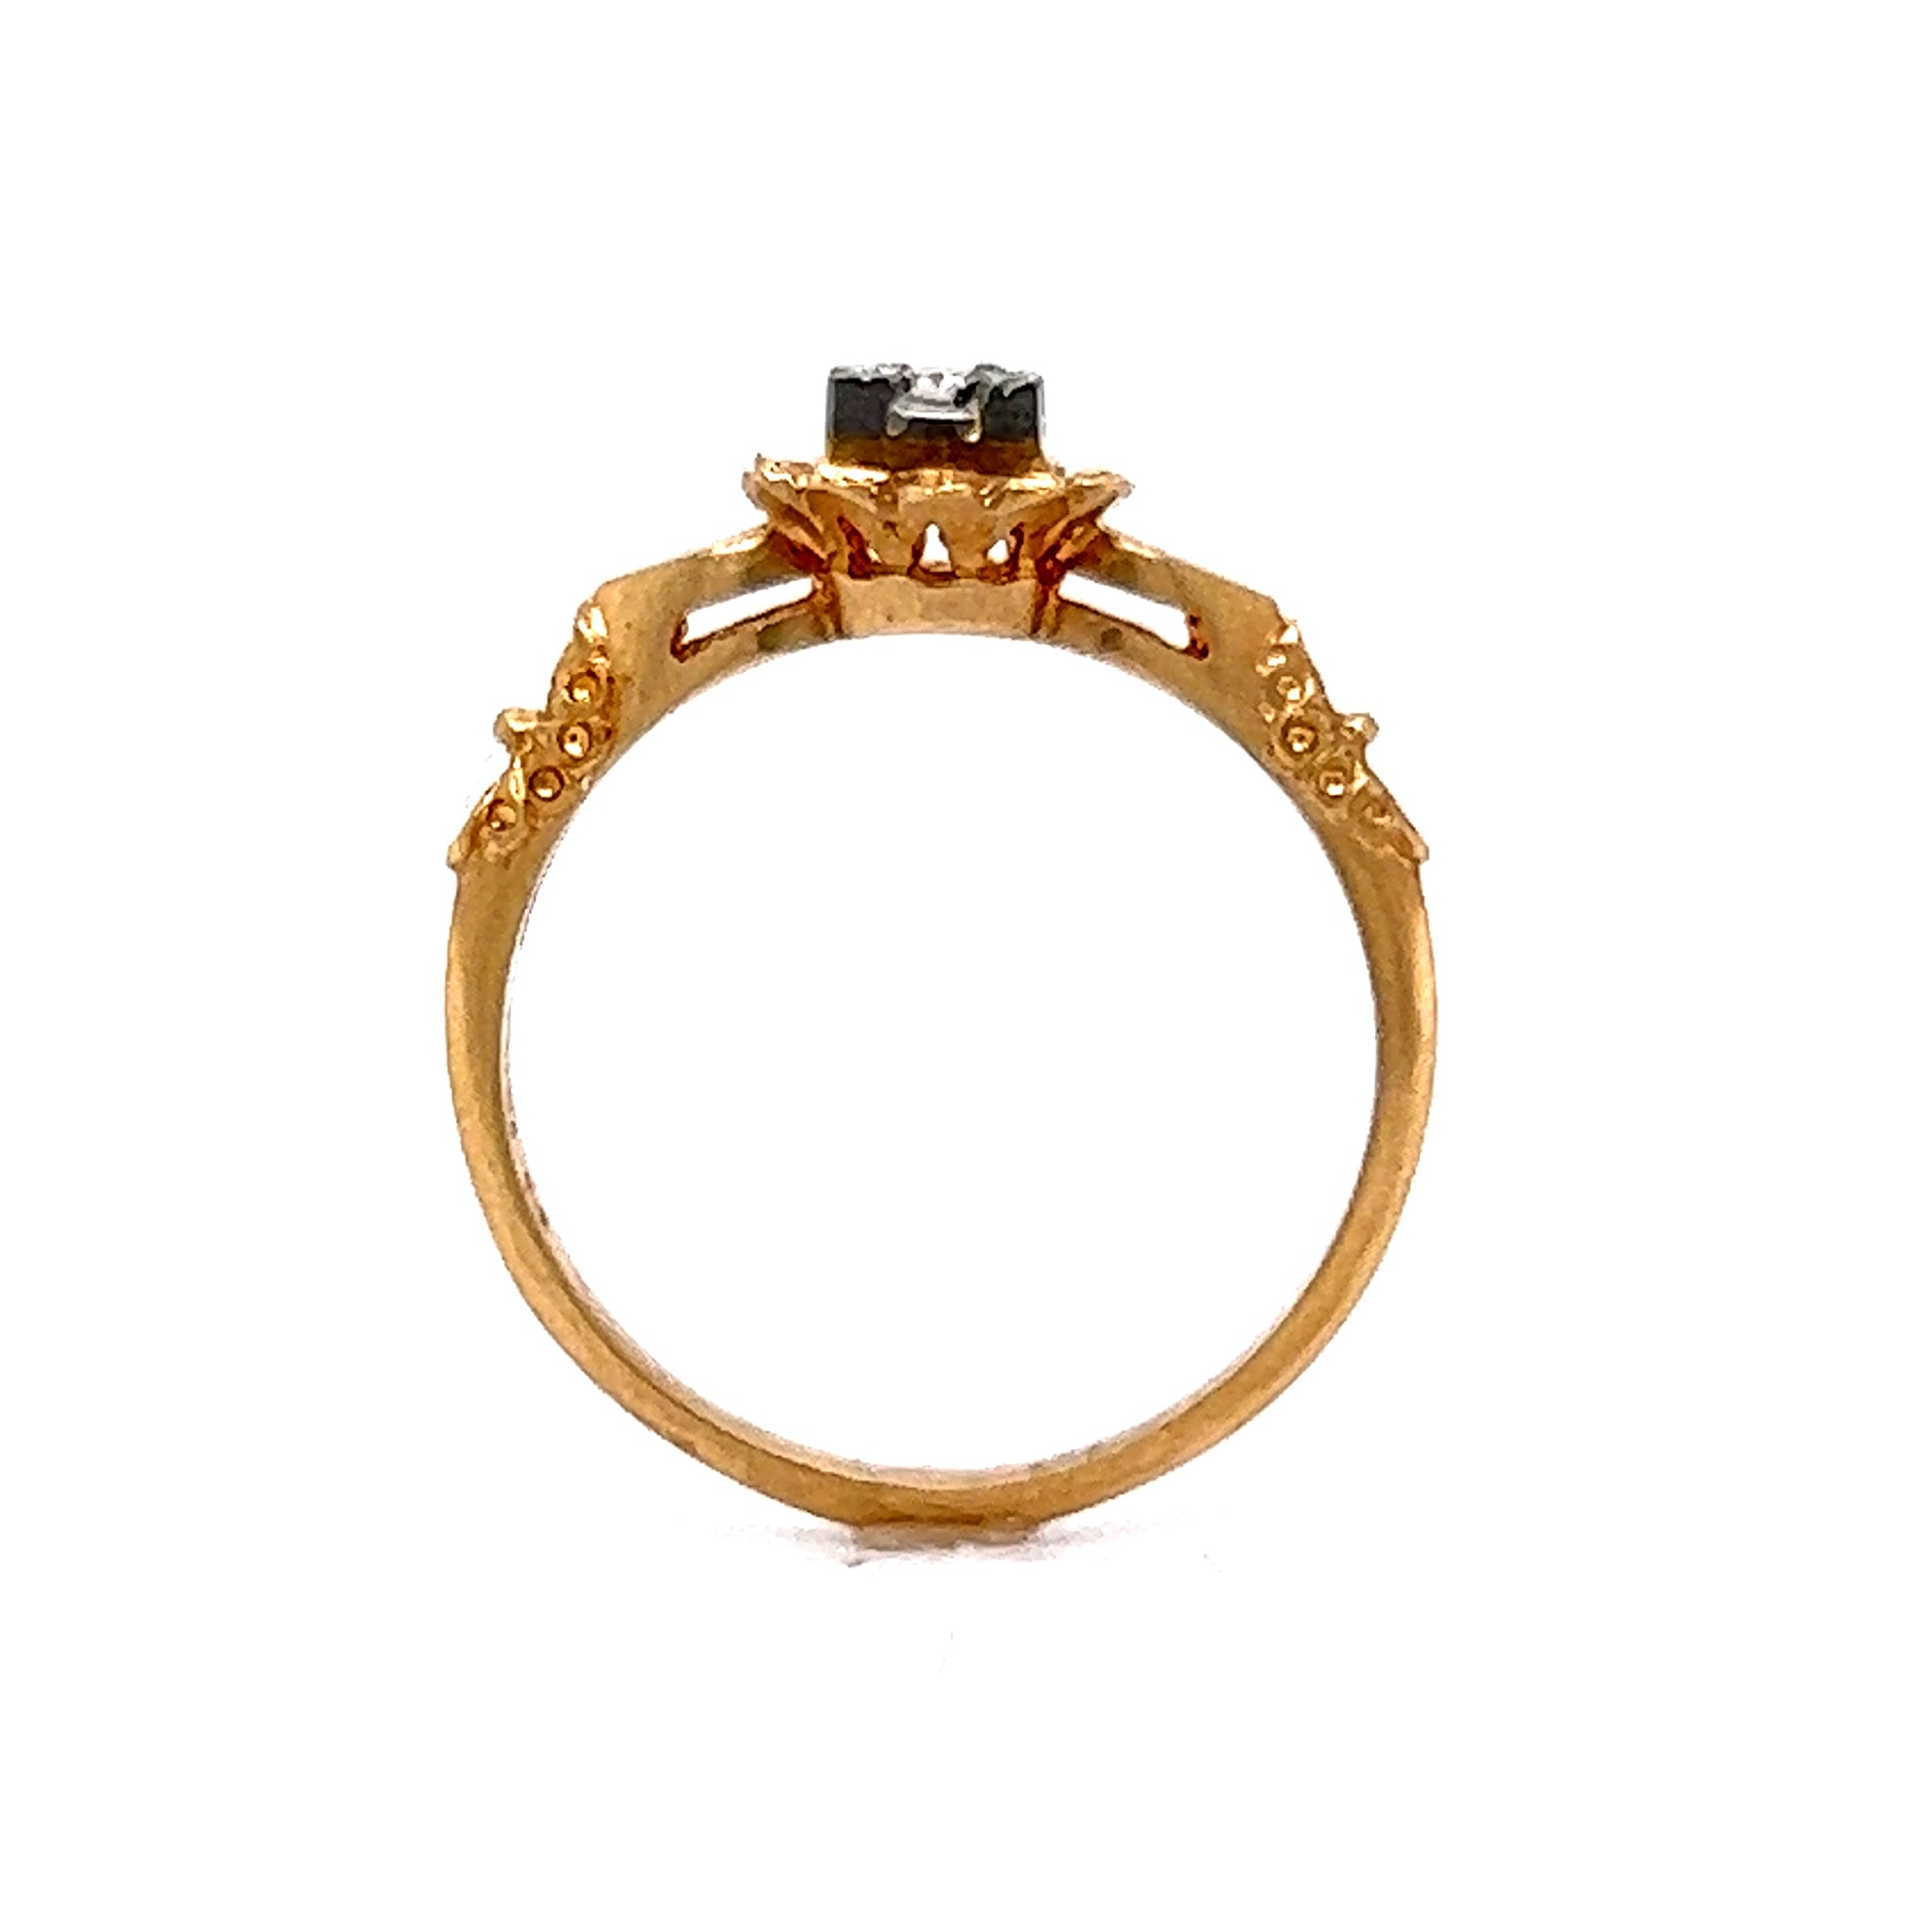 Delicate Retro Diamond Engagement Ring in 14k & 18k GoldComposition: 14 Karat Yellow Gold/18 Karat White GoldRing Size: 6.5Total Diamond Weight: .04 ctTotal Gram Weight: 1.7 gInscription: 14-18k